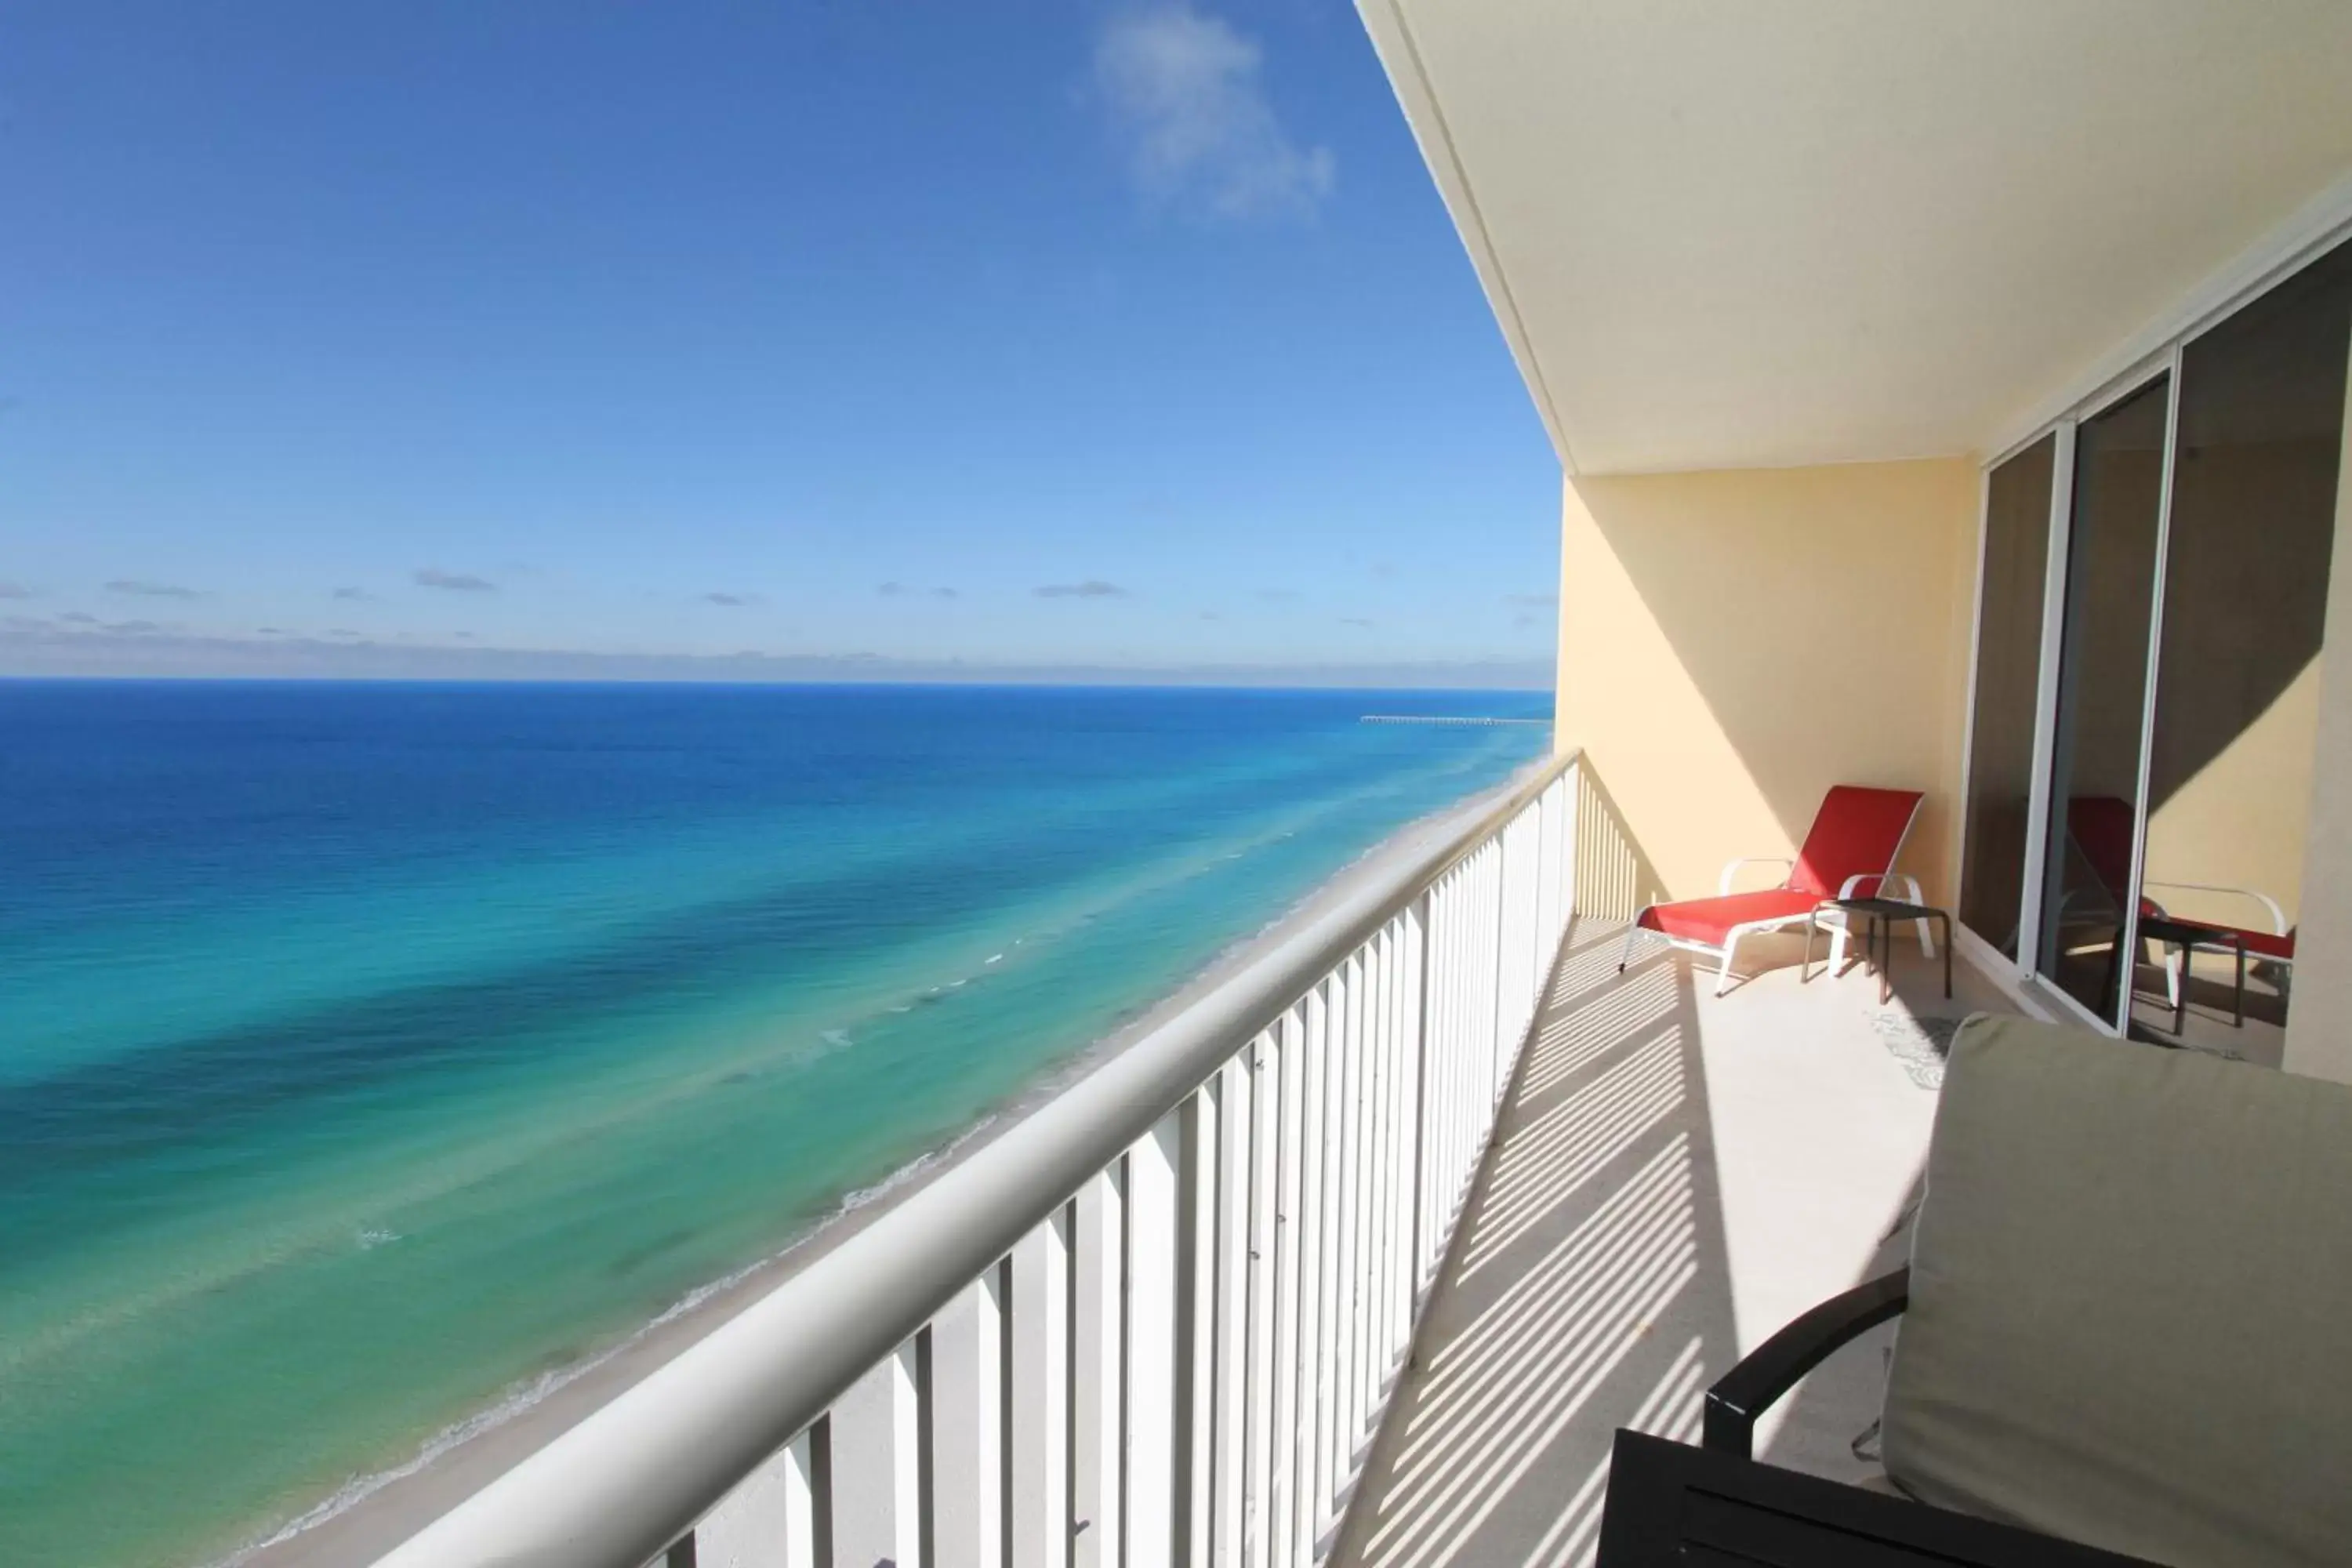 Balcony/Terrace in Majestic Beach Resort, Panama City Beach, Fl